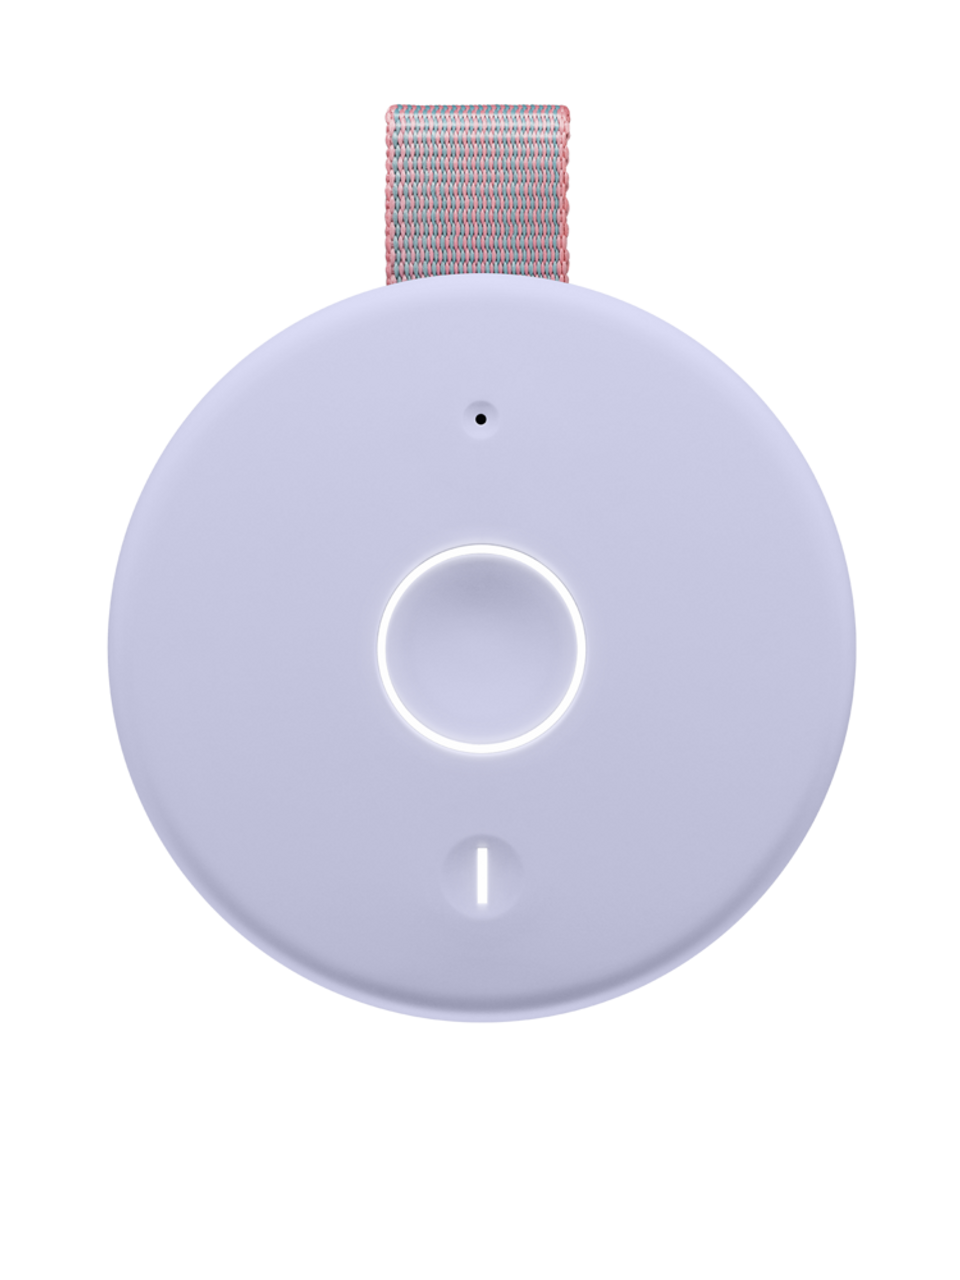 MEGABOOM 3 Bluetooth Speaker  Ultimate Ears Speaker with Thundering Bass